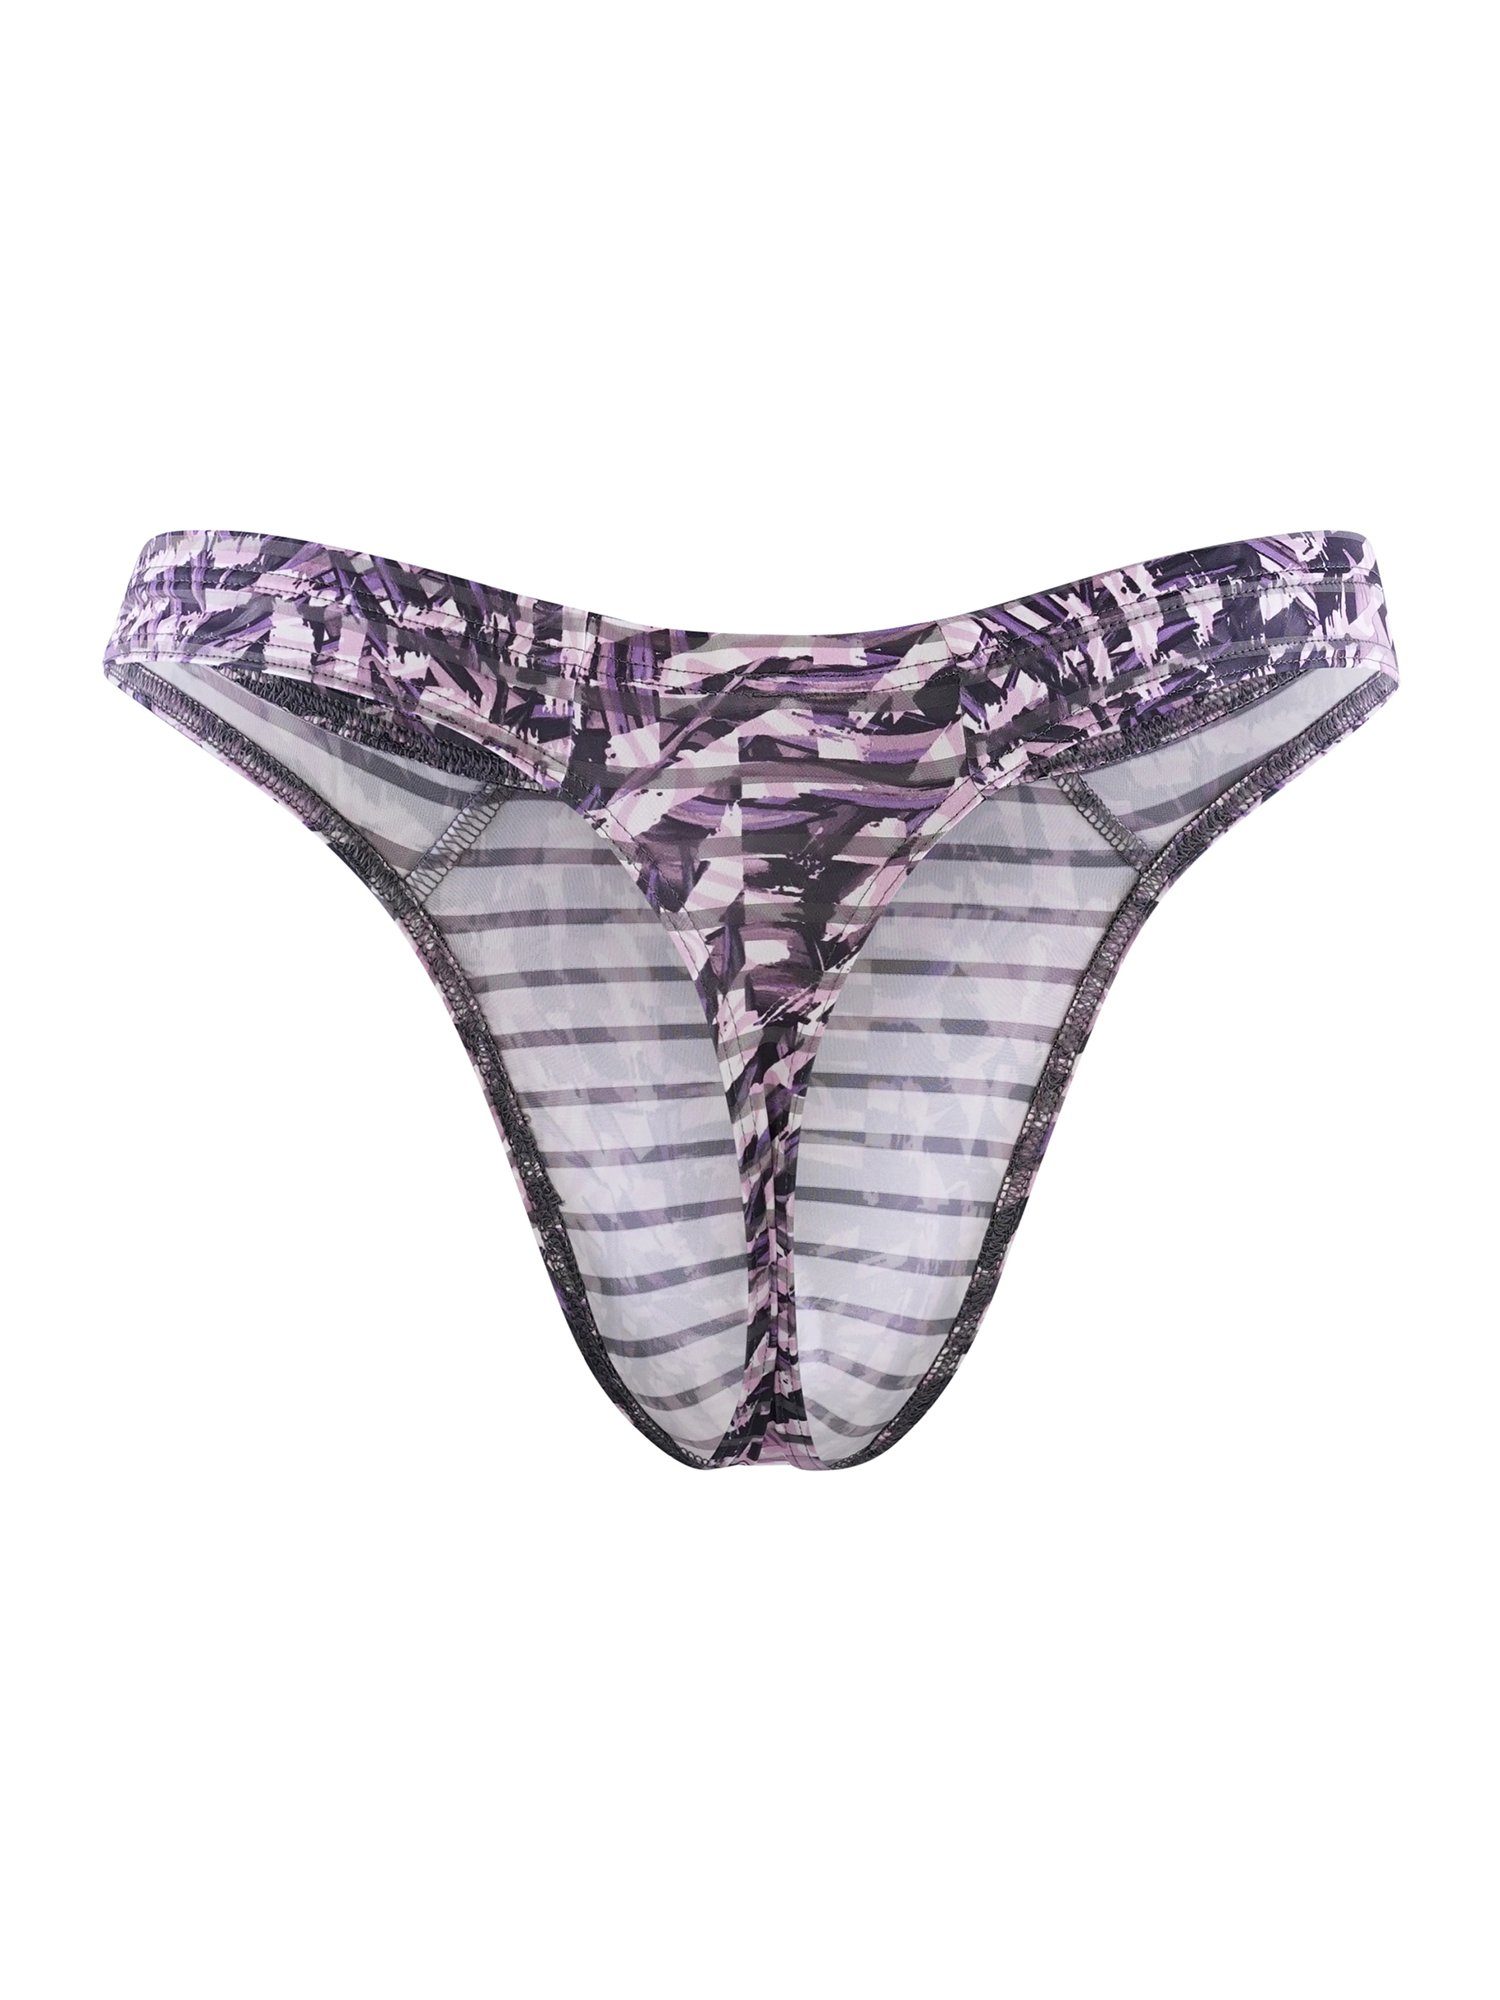 Benz Ministring tanga RED2333 String Olaf style unterwäsche violet unterhose